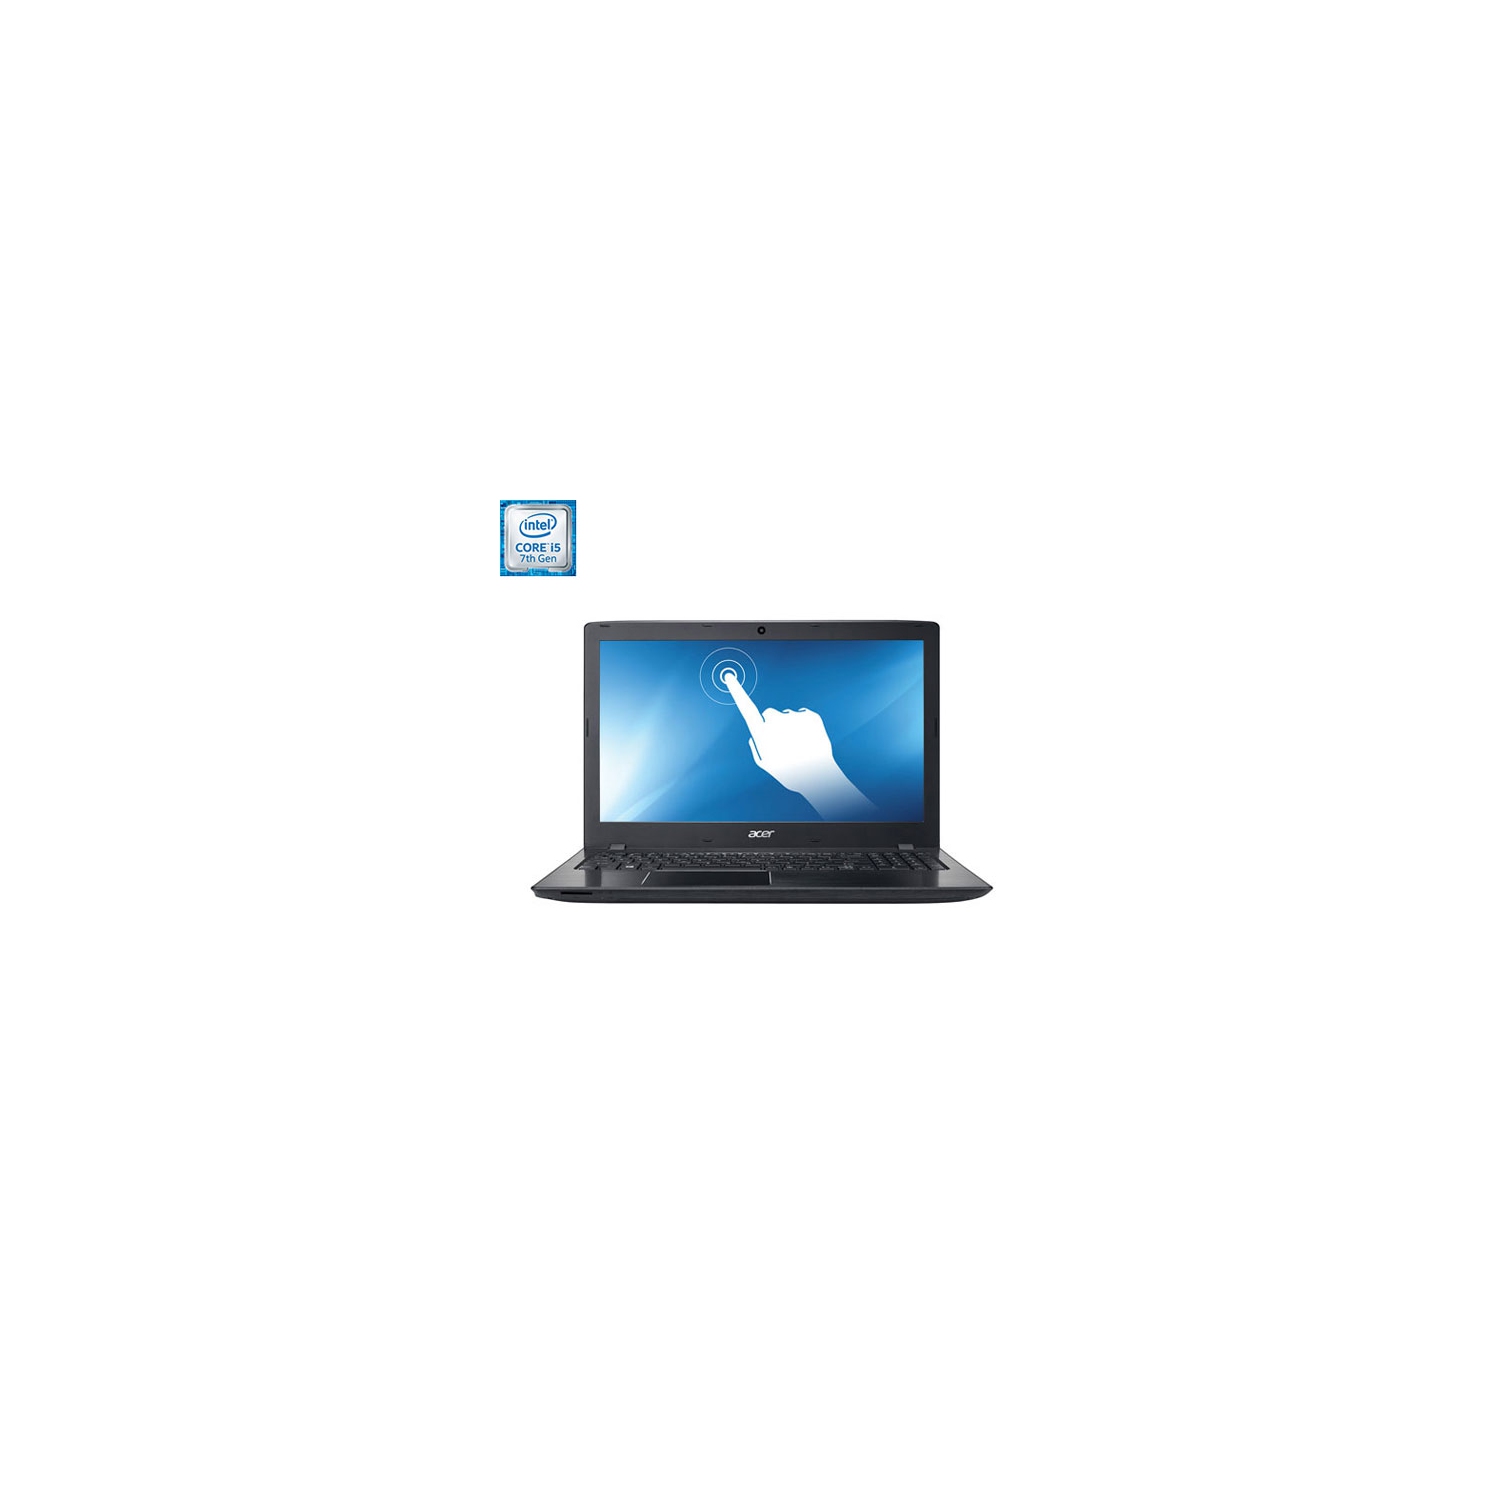 Refurbished (Good) - Acer Aspire E 15.6" Touchscreen Laptop - Black/Iron (Intel Core i5-7200U/1TB HDD/8GB RAM/Windows 10)